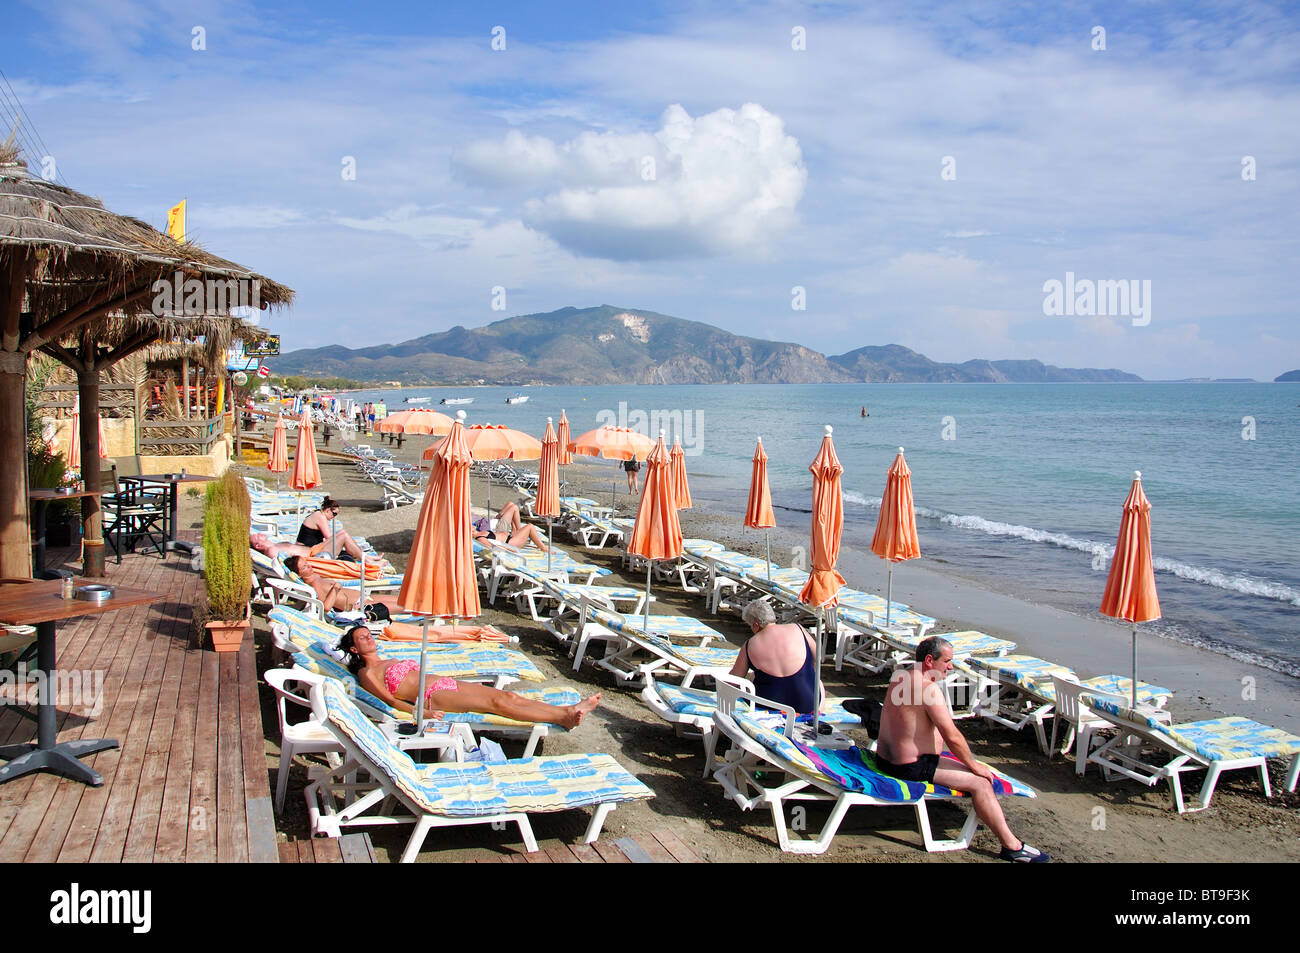 Beach cafe, Laganas Beach, Laganas, Zakynthos (Zante), Ionian Islands, Greece Stock Photo